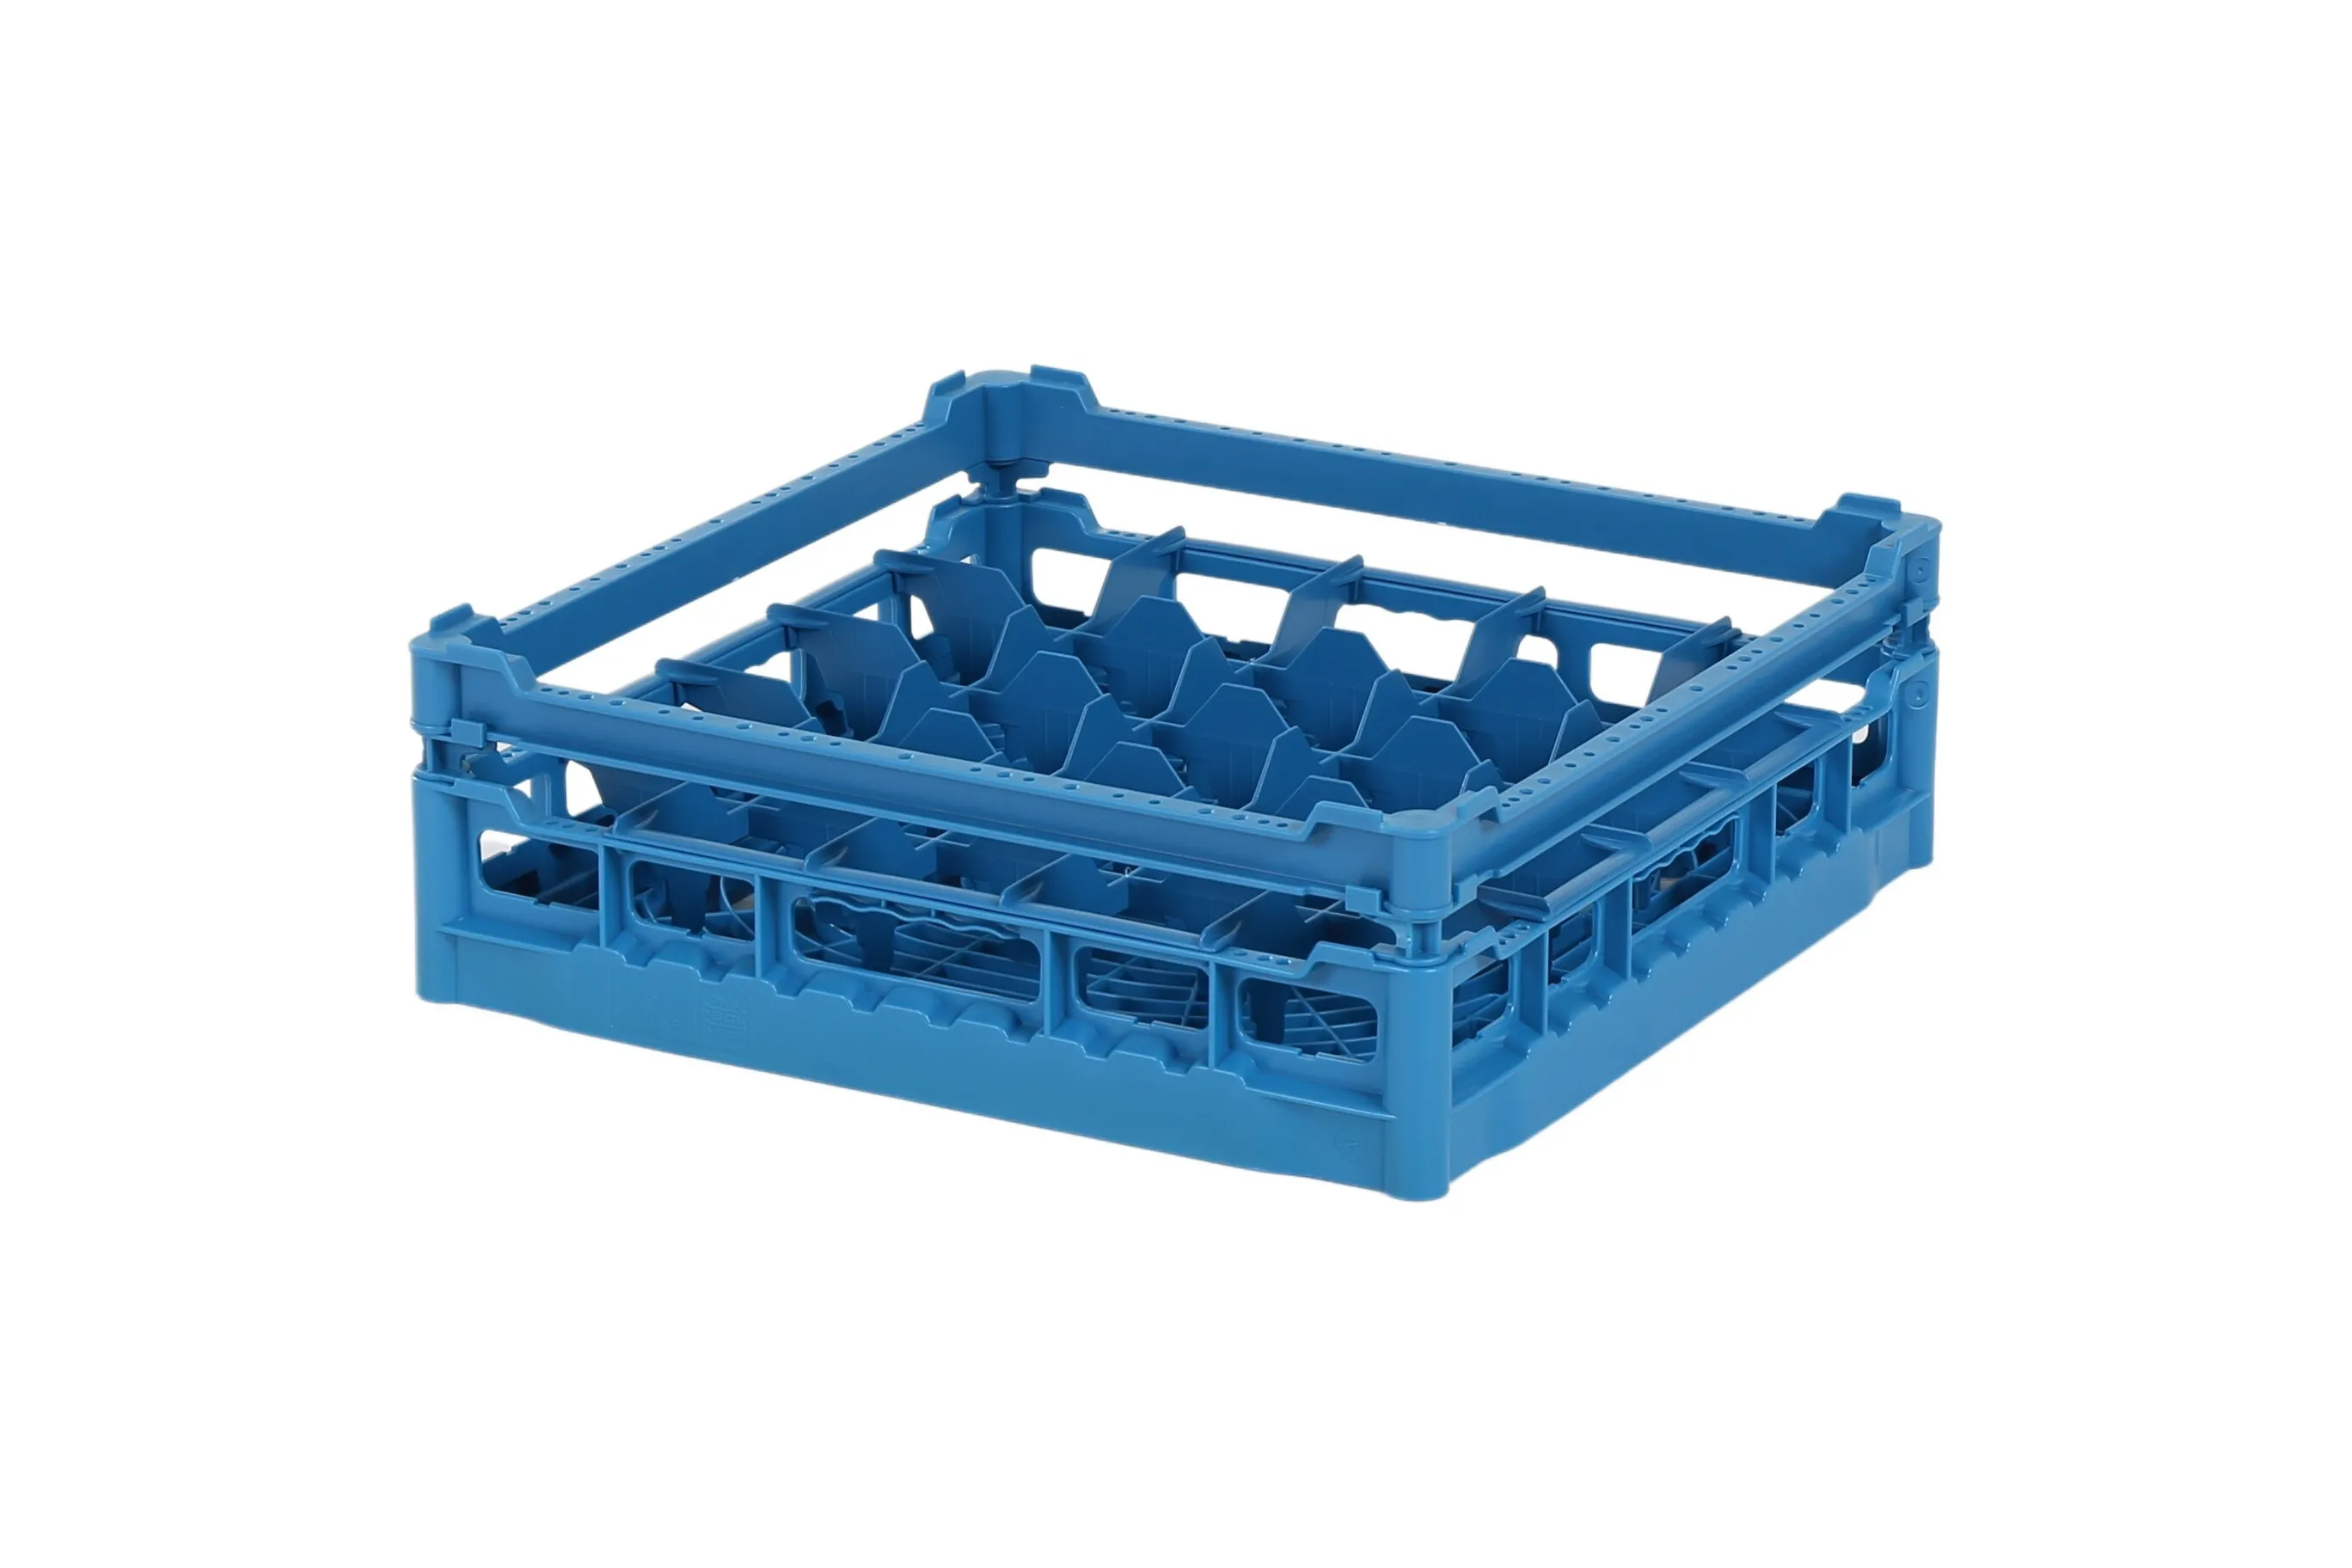 Glass basket 500x500mm blue - maximum glass height 120 mm - with blue 5x5 compartmentalization - maximum glass Ø 90mm